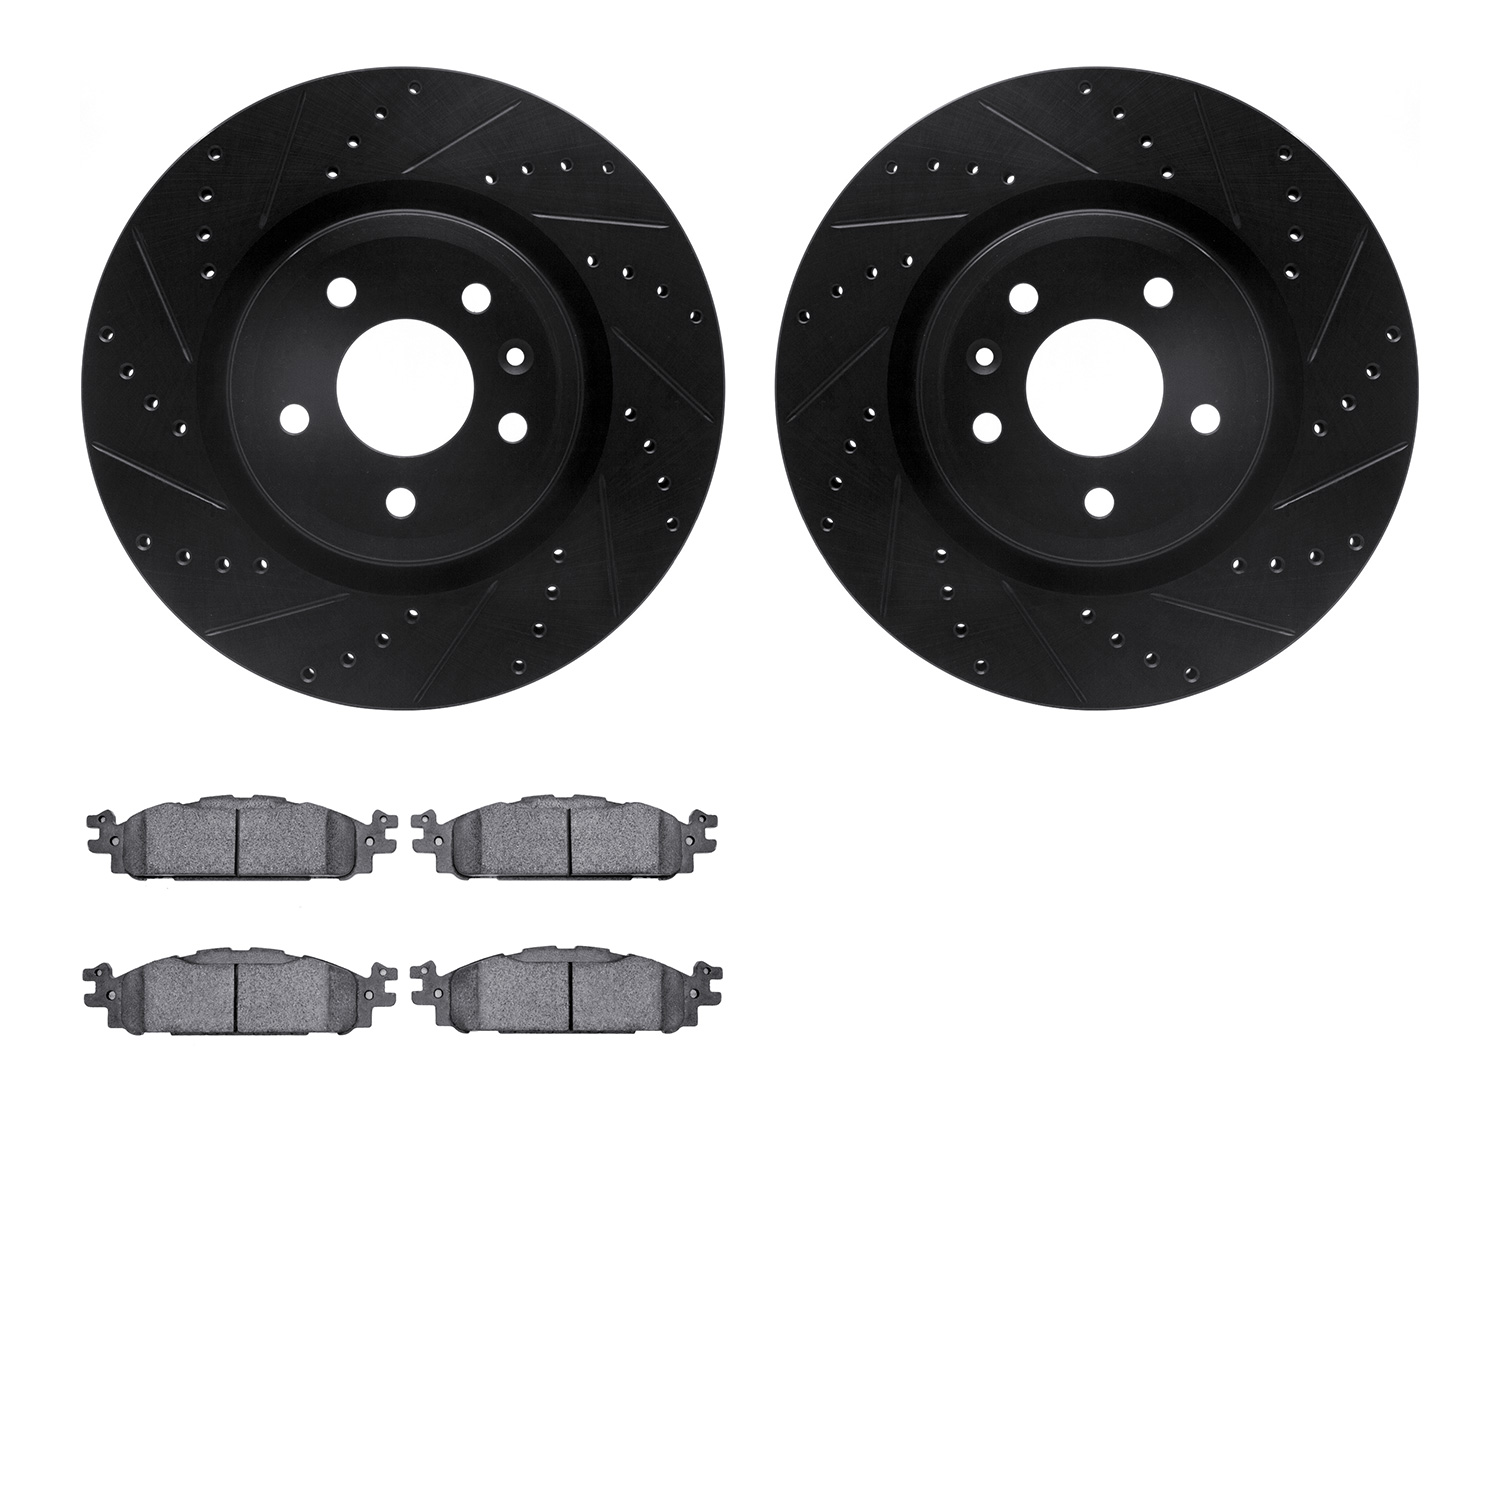 8302-54204 Drilled/Slotted Brake Rotors with 3000-Series Ceramic Brake Pads Kit [Black], 2011-2019 Ford/Lincoln/Mercury/Mazda, P